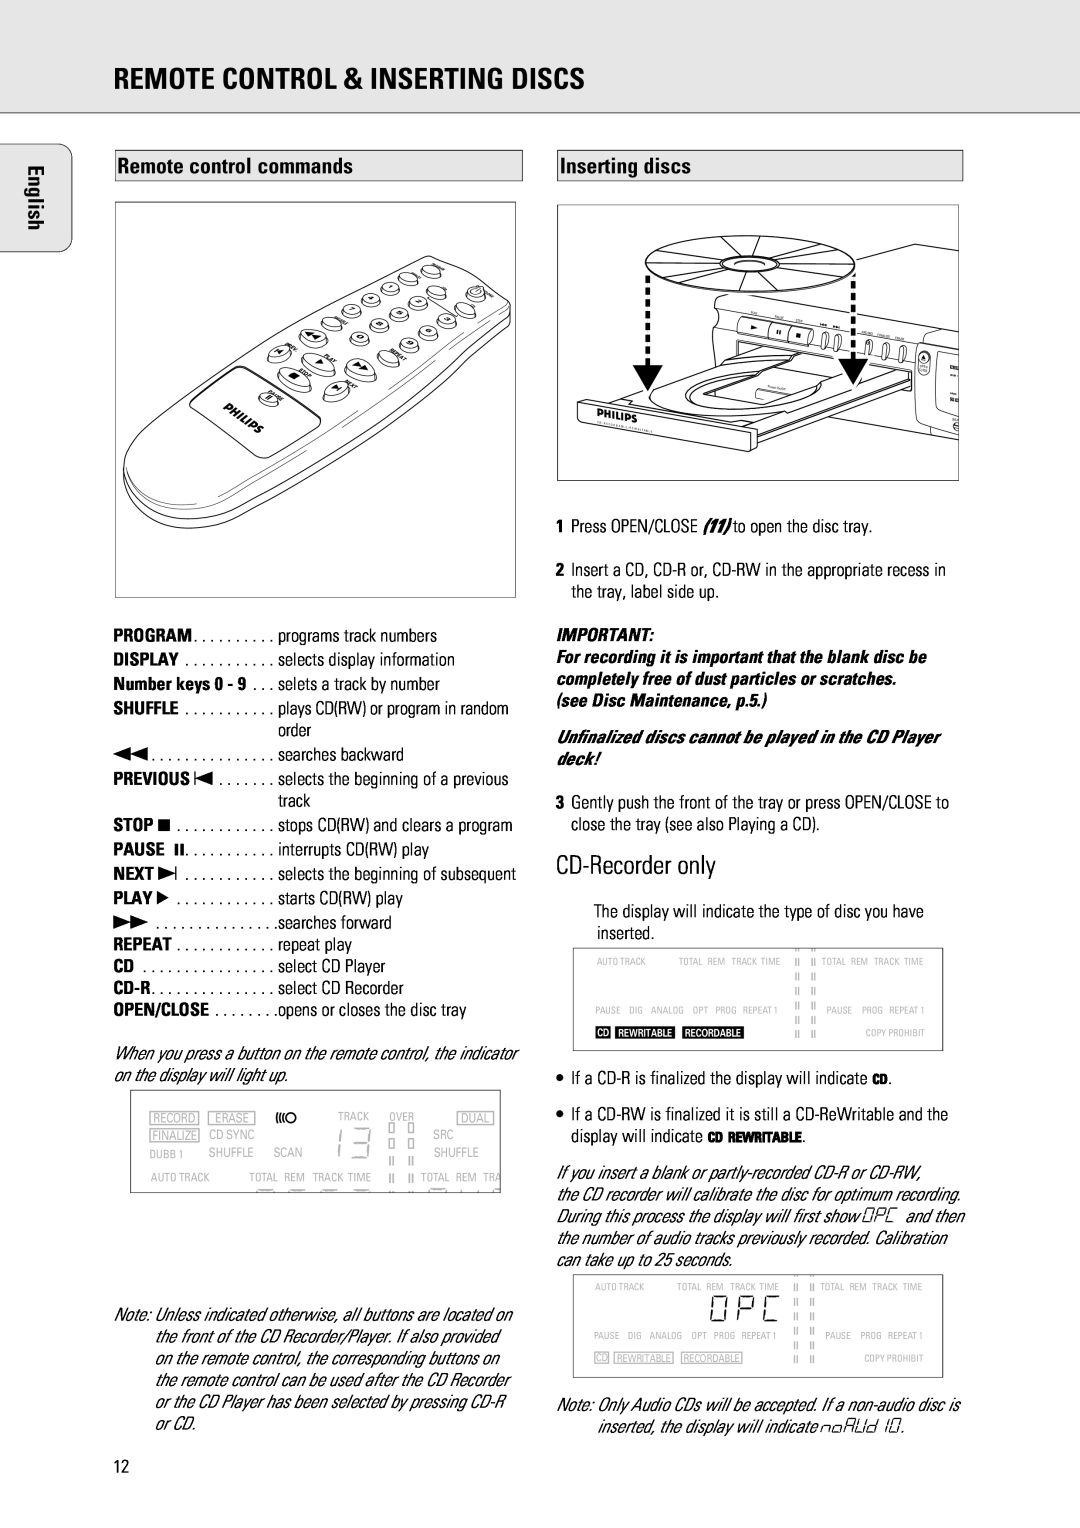 Philips 765 manual Remote Control & Inserting Discs, CD-Recorderonly, Remote control commands, Inserting discs, English 